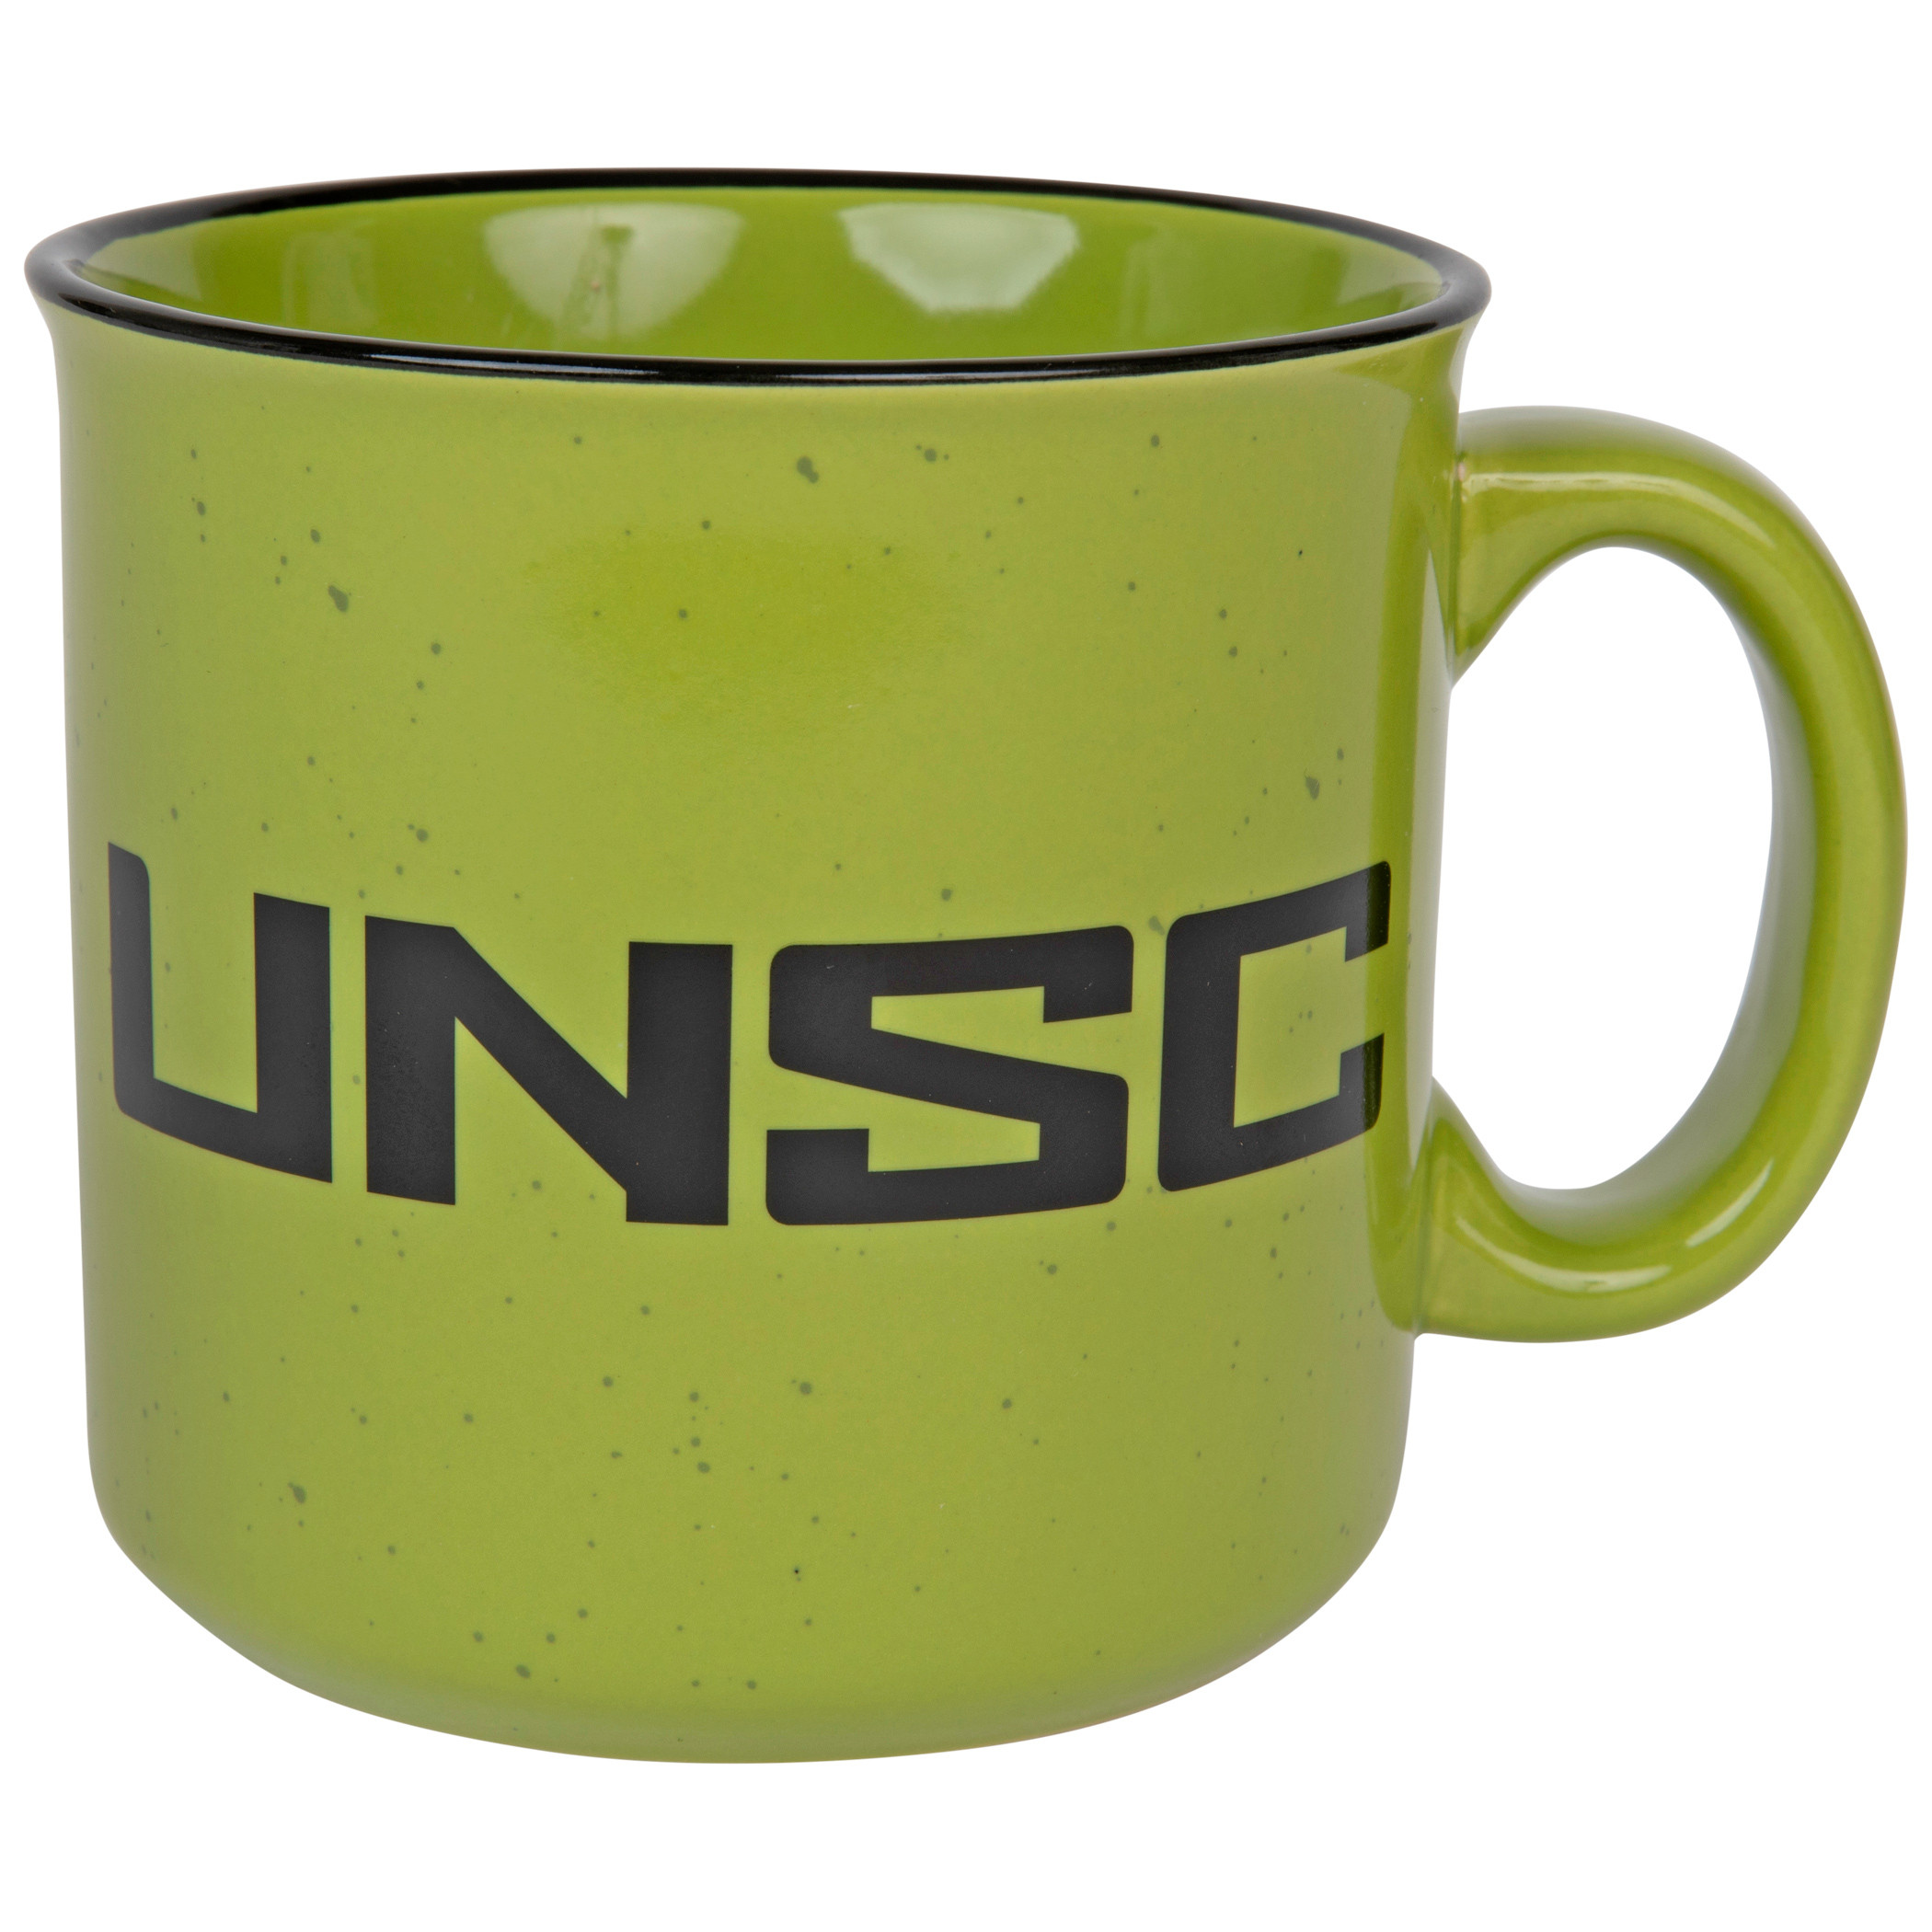 Halo UNSC Green Logo 20oz Mug